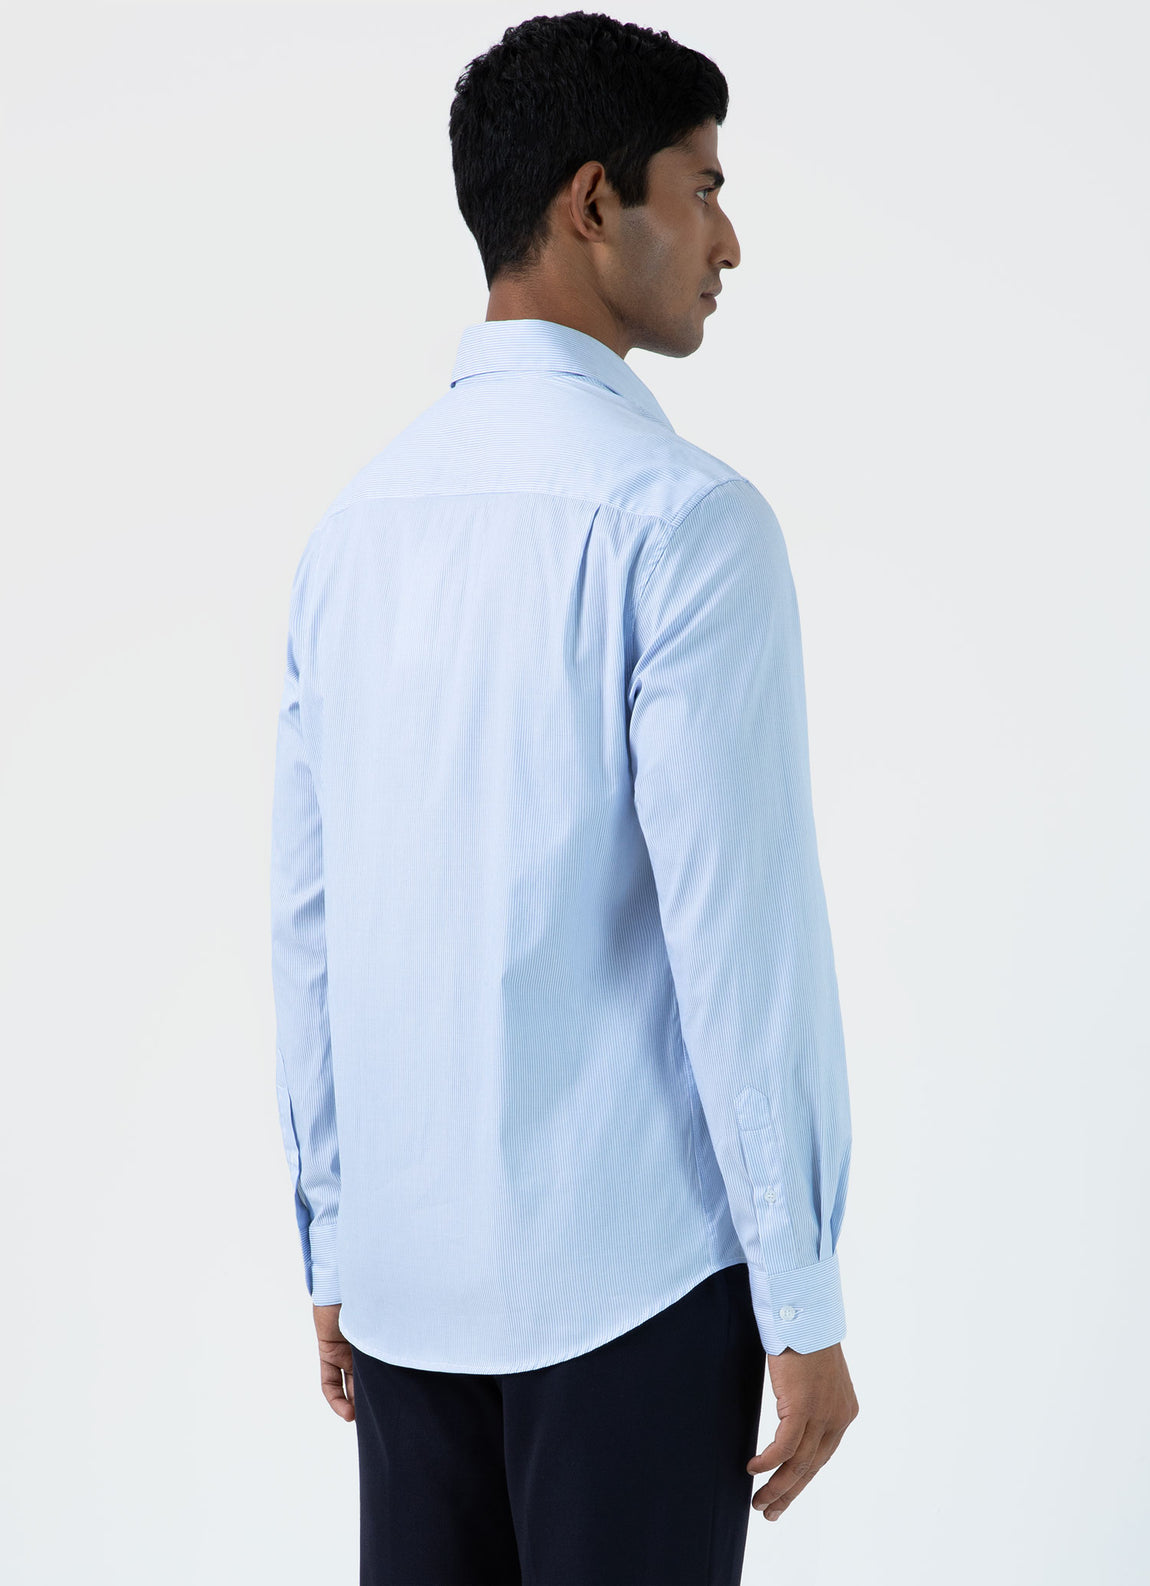 Men's Cotton Stretch Shirt in Light Blue/White | Sunspel